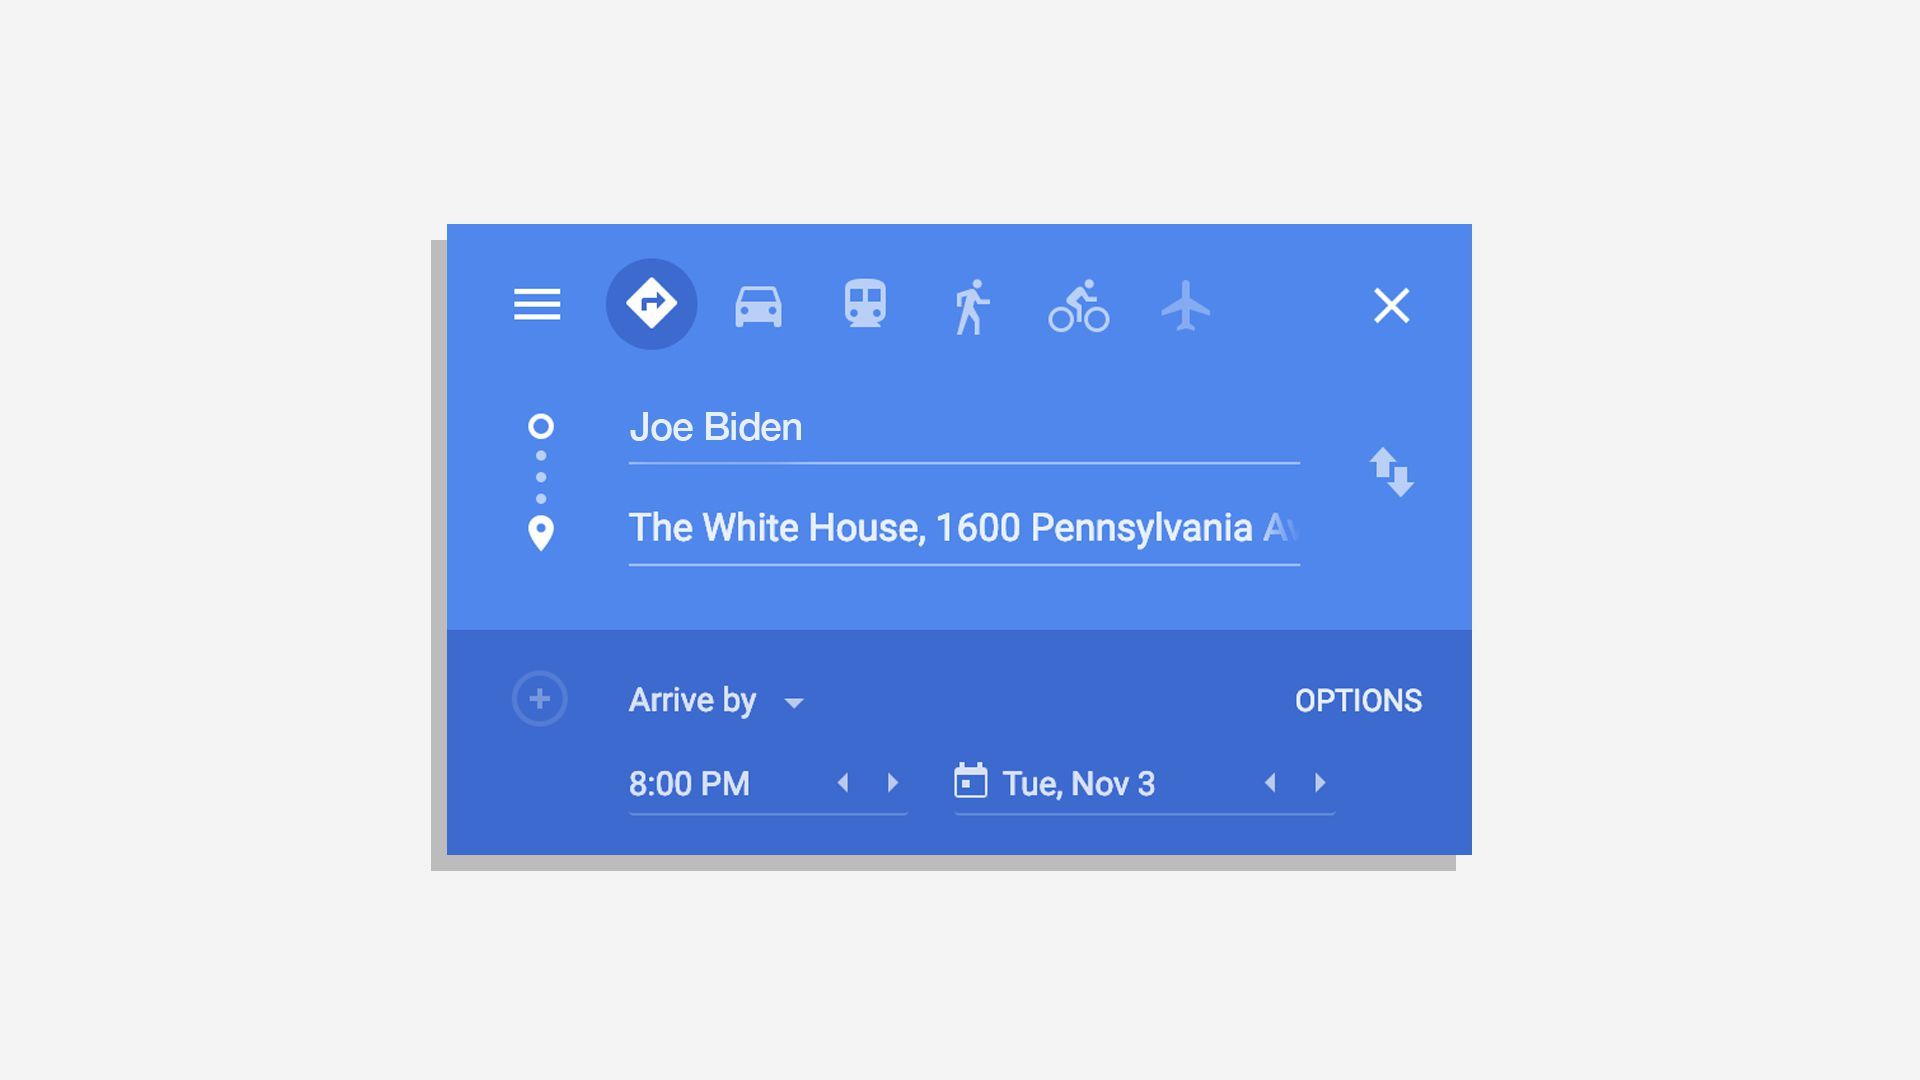 Google maps directions that says from Joe Biden to 1600 pennsylvania avenue